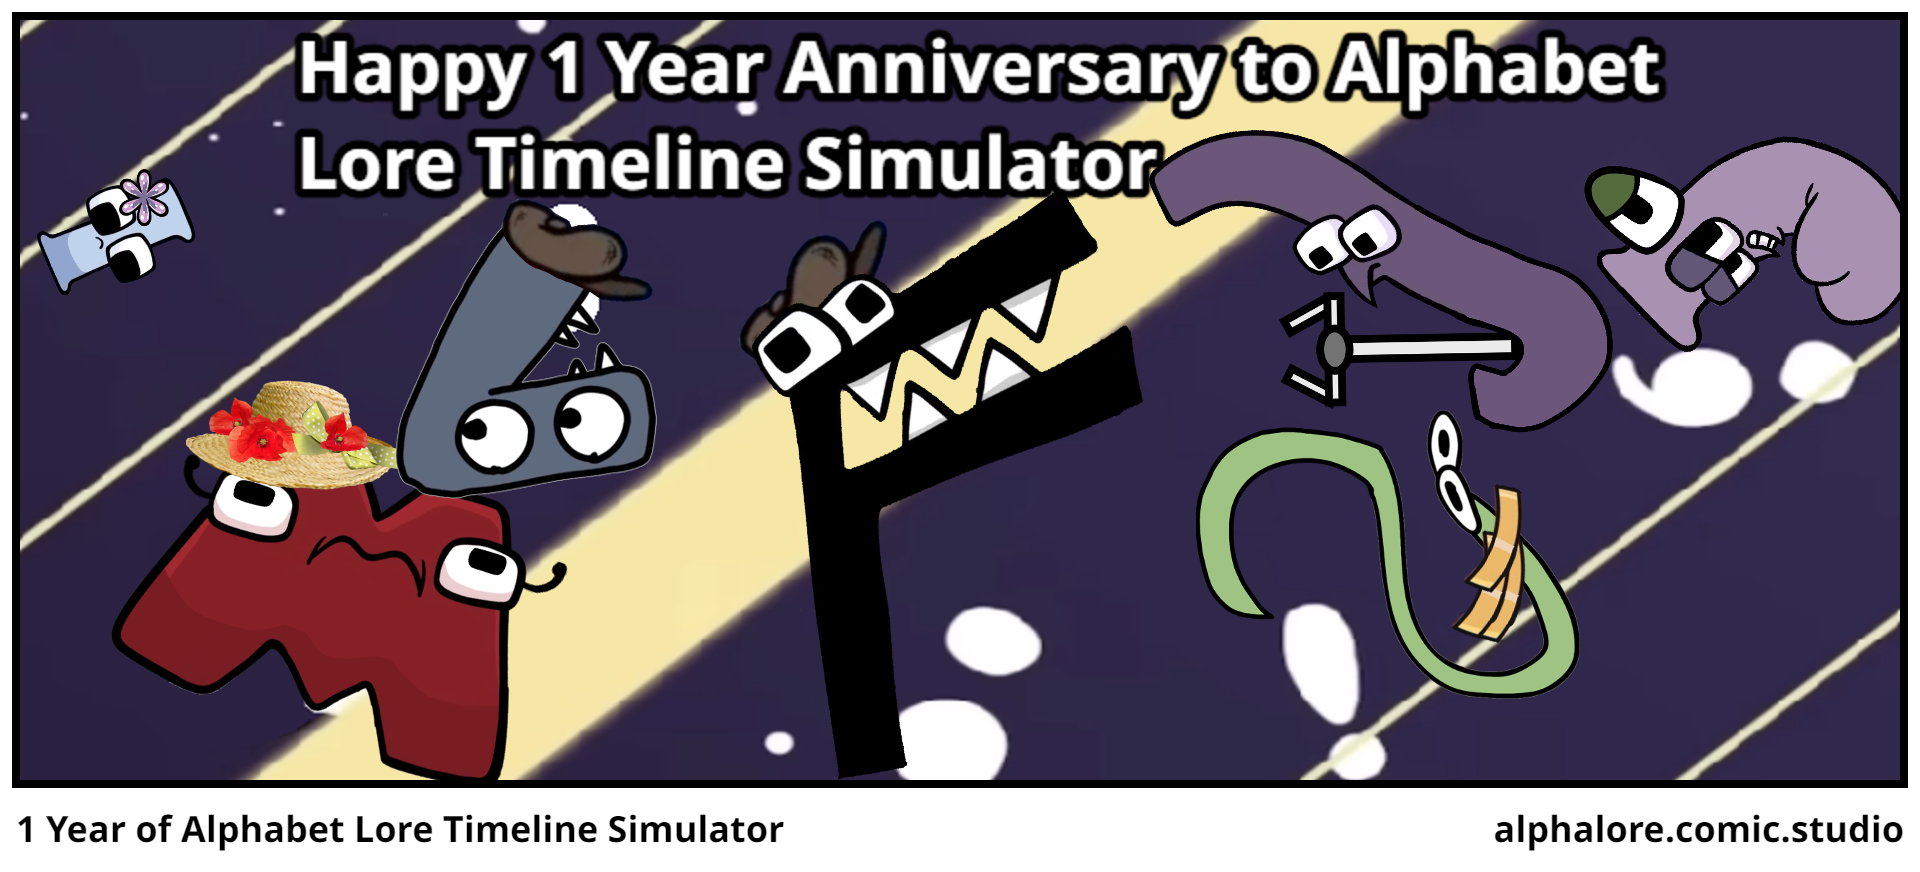 1 Year of Alphabet Lore Timeline Simulator